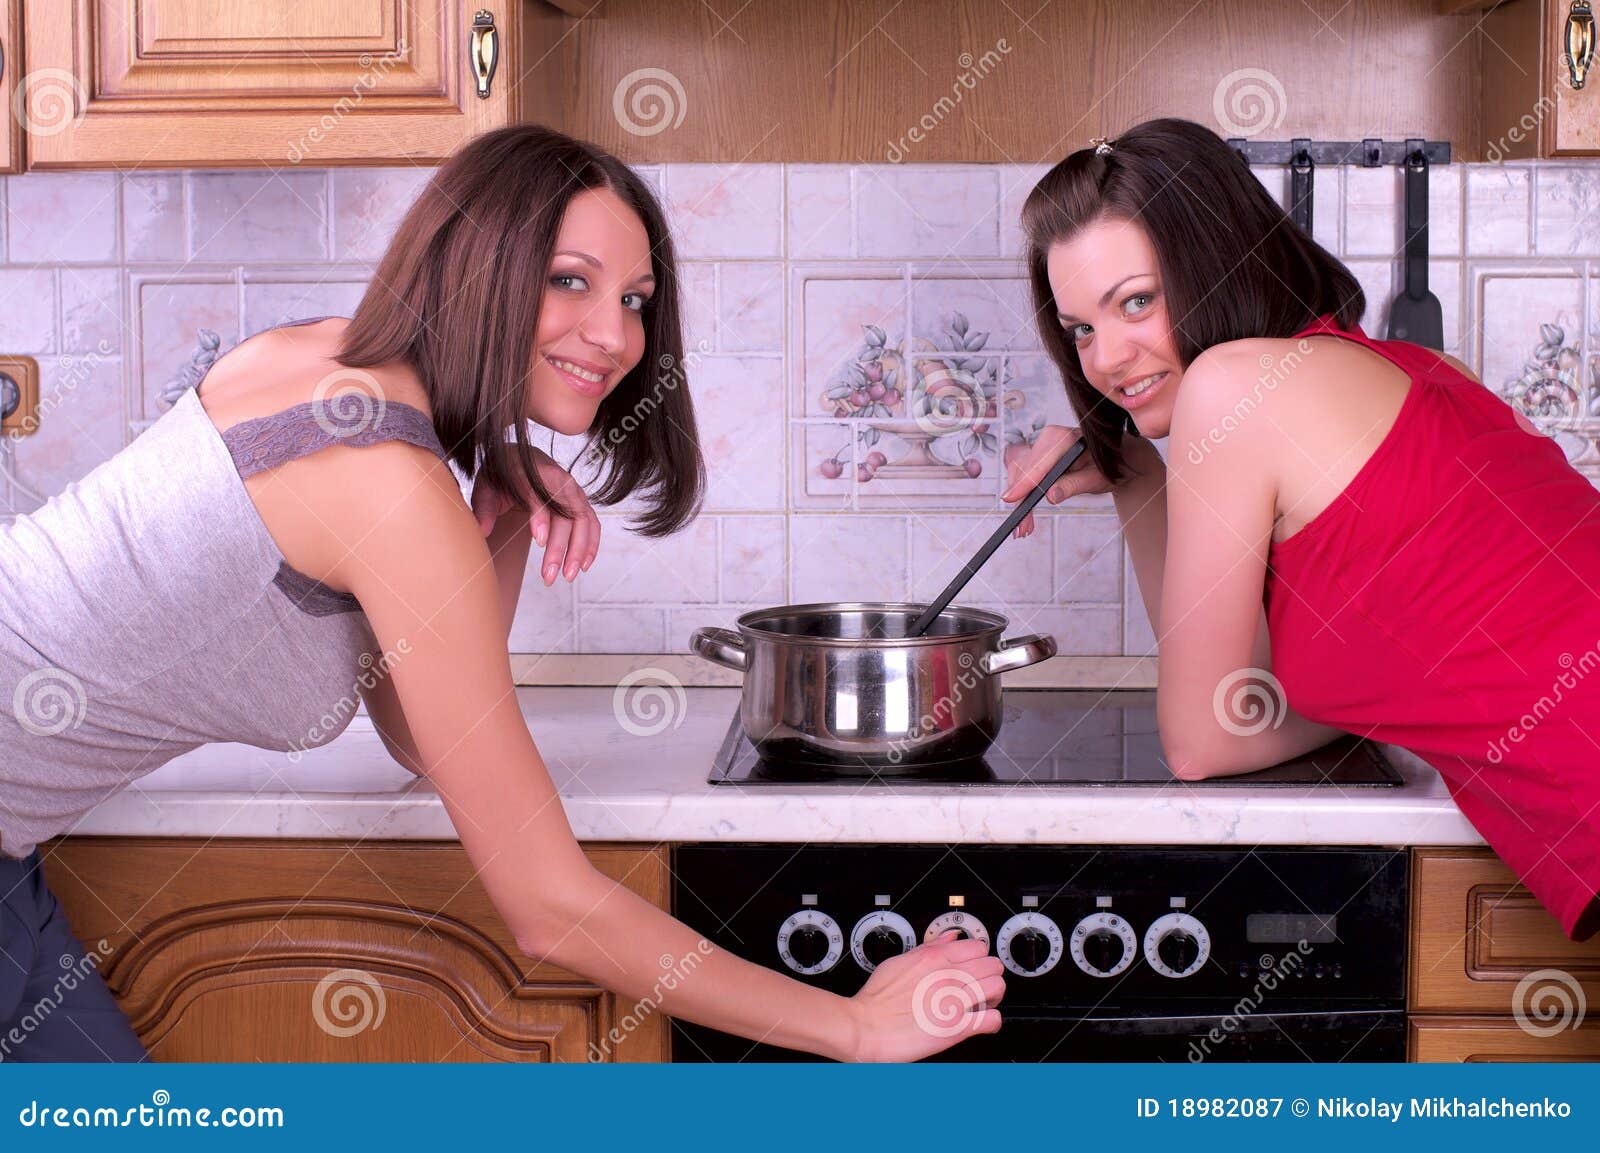 порно брат с сестрой блондинкой на кухне фото 60